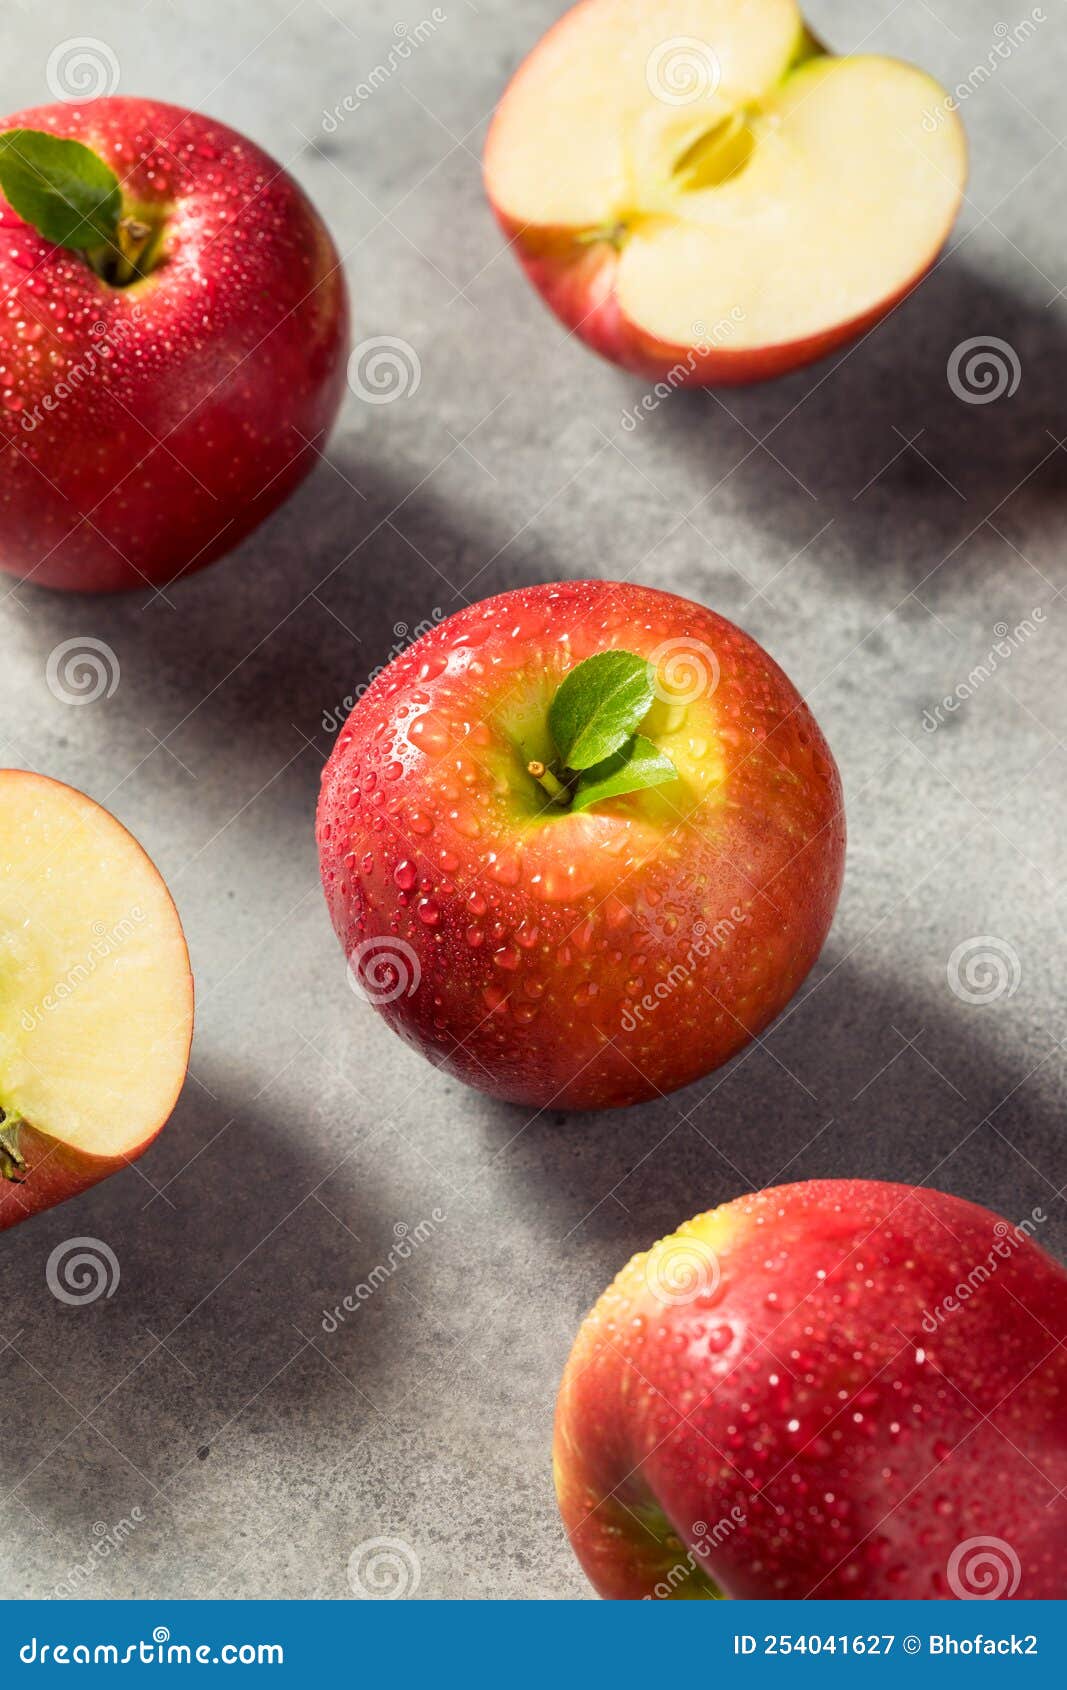 https://thumbs.dreamstime.com/z/raw-red-organic-cosmic-crisp-apples-bunch-254041627.jpg